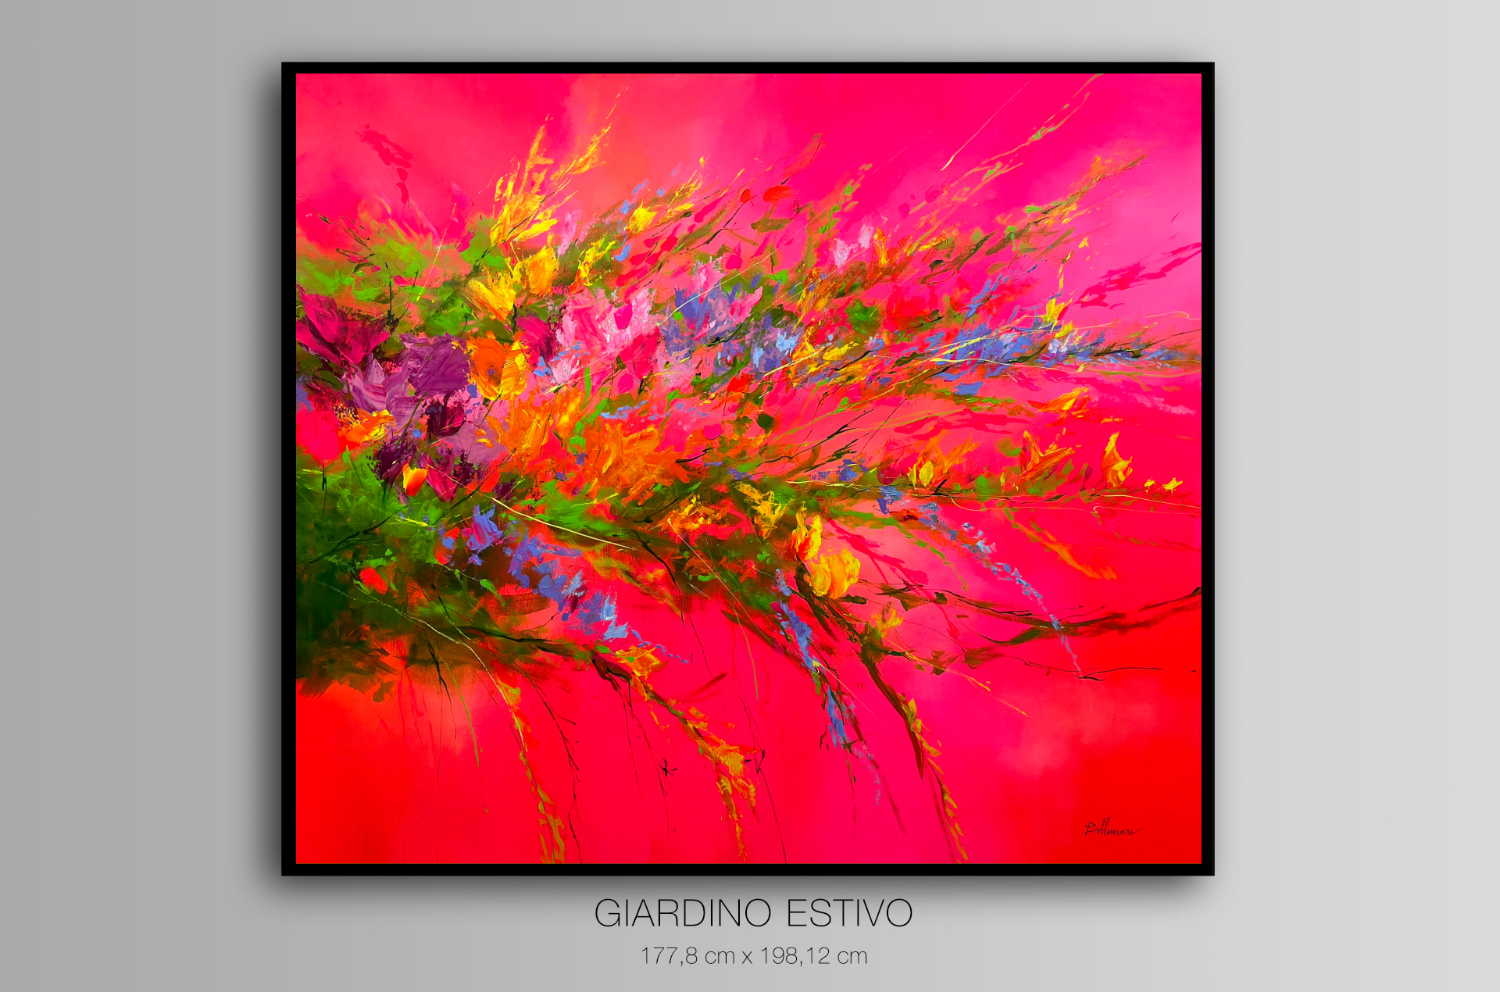 Giardino Estivo - Featured